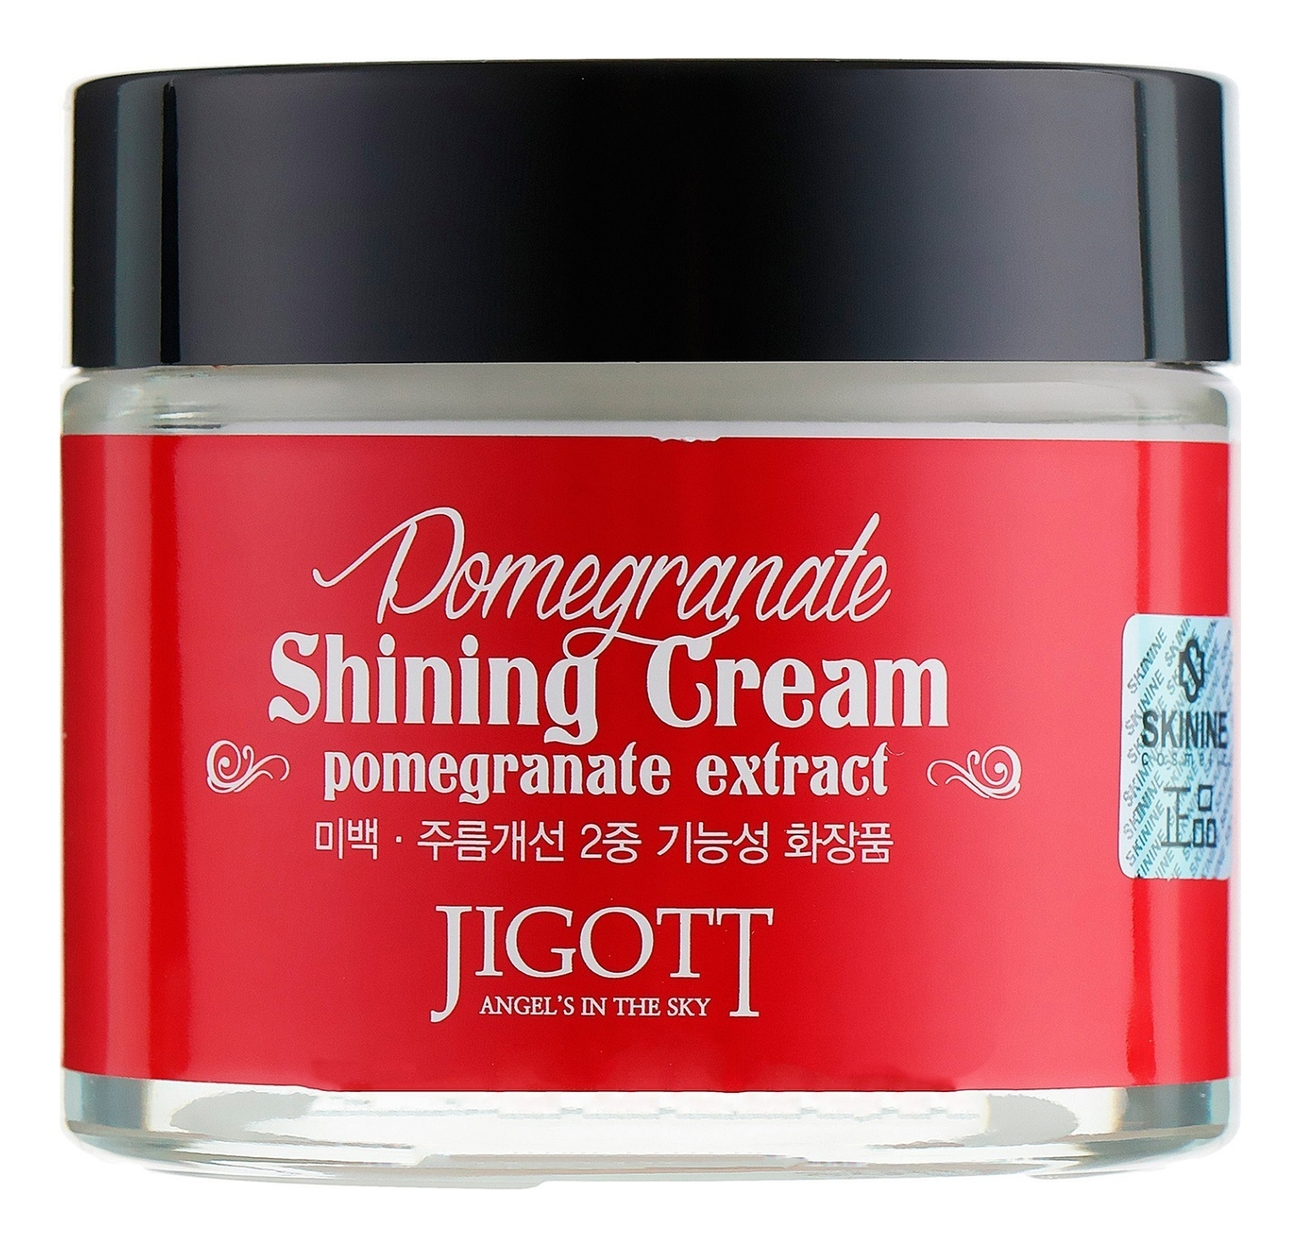 Крем для лица с экстрактом граната Pomegranate Shining Cream 70мл крем с экстрактом граната для яркости кожи jigott pomegranate shining cream